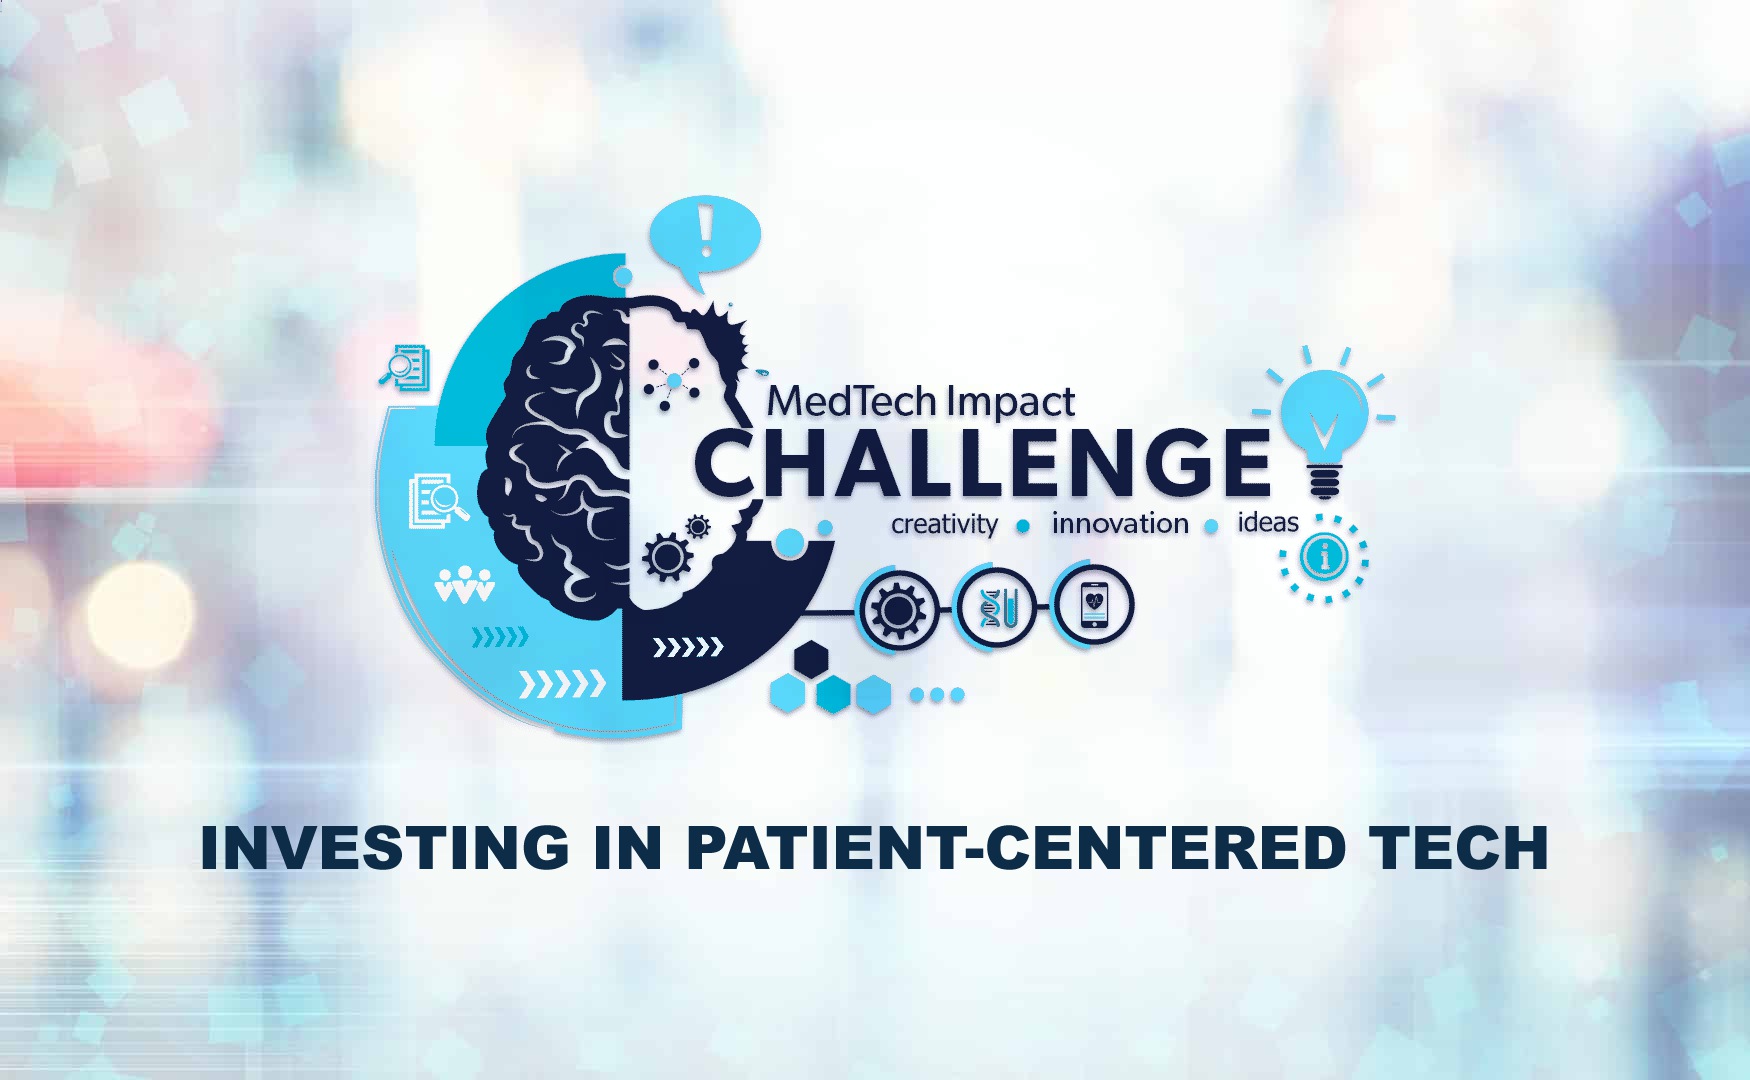 Medtech Impact CHALLENGE 2019